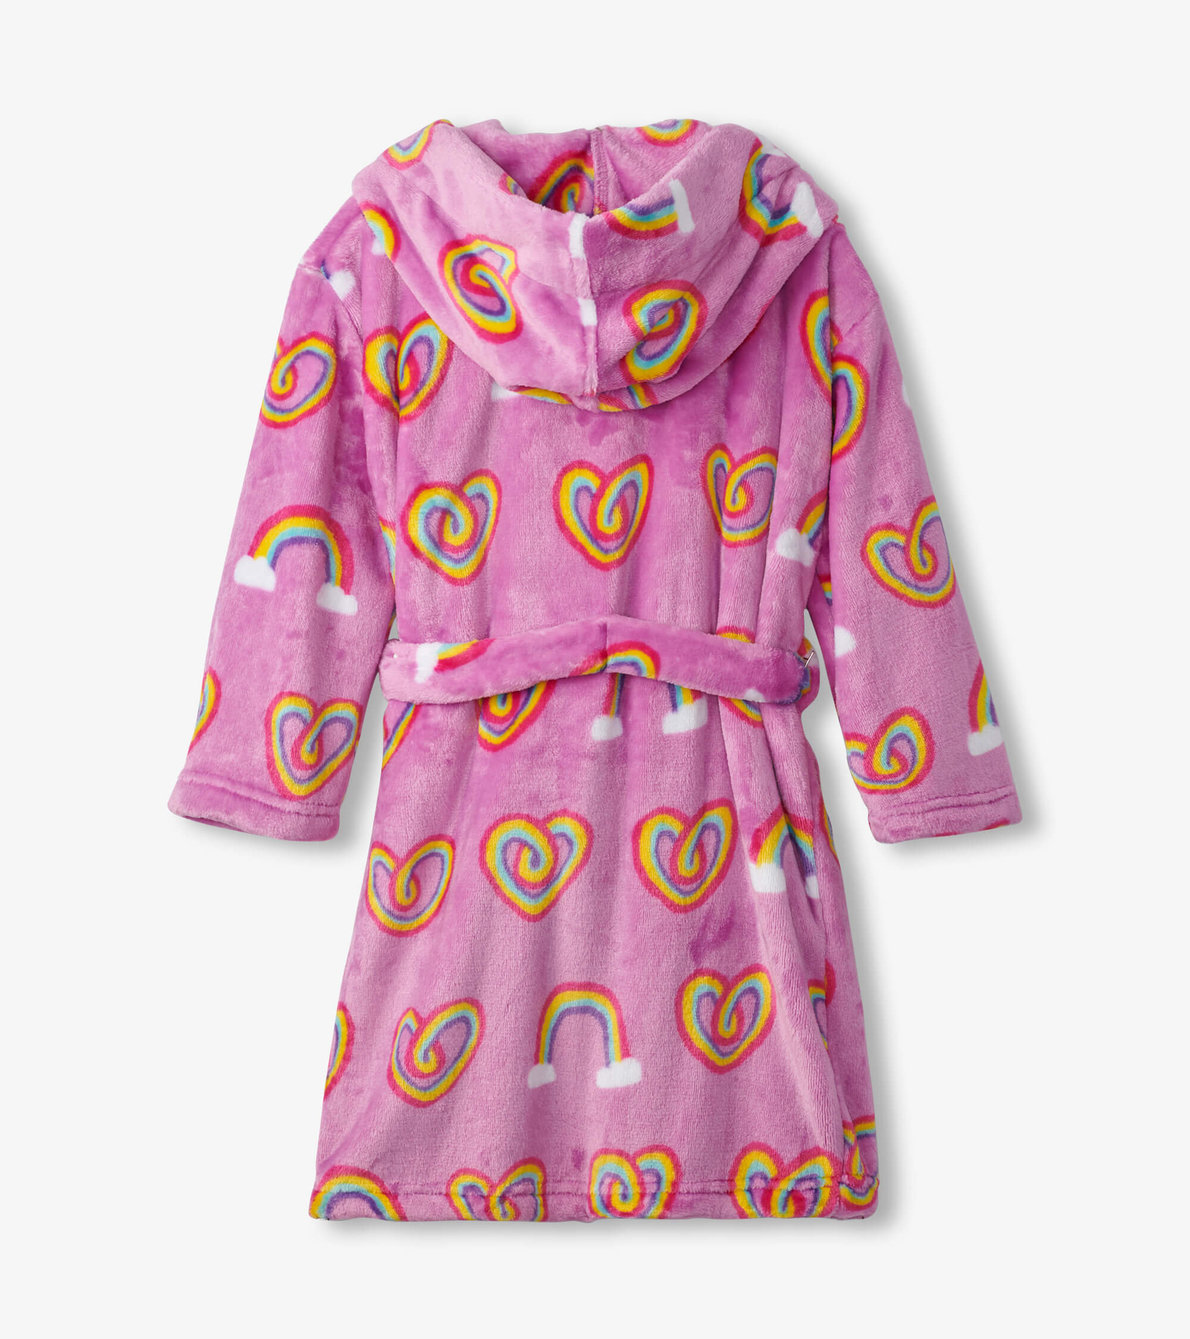 View larger image of Twisty Rainbow Hearts Fleece Robe